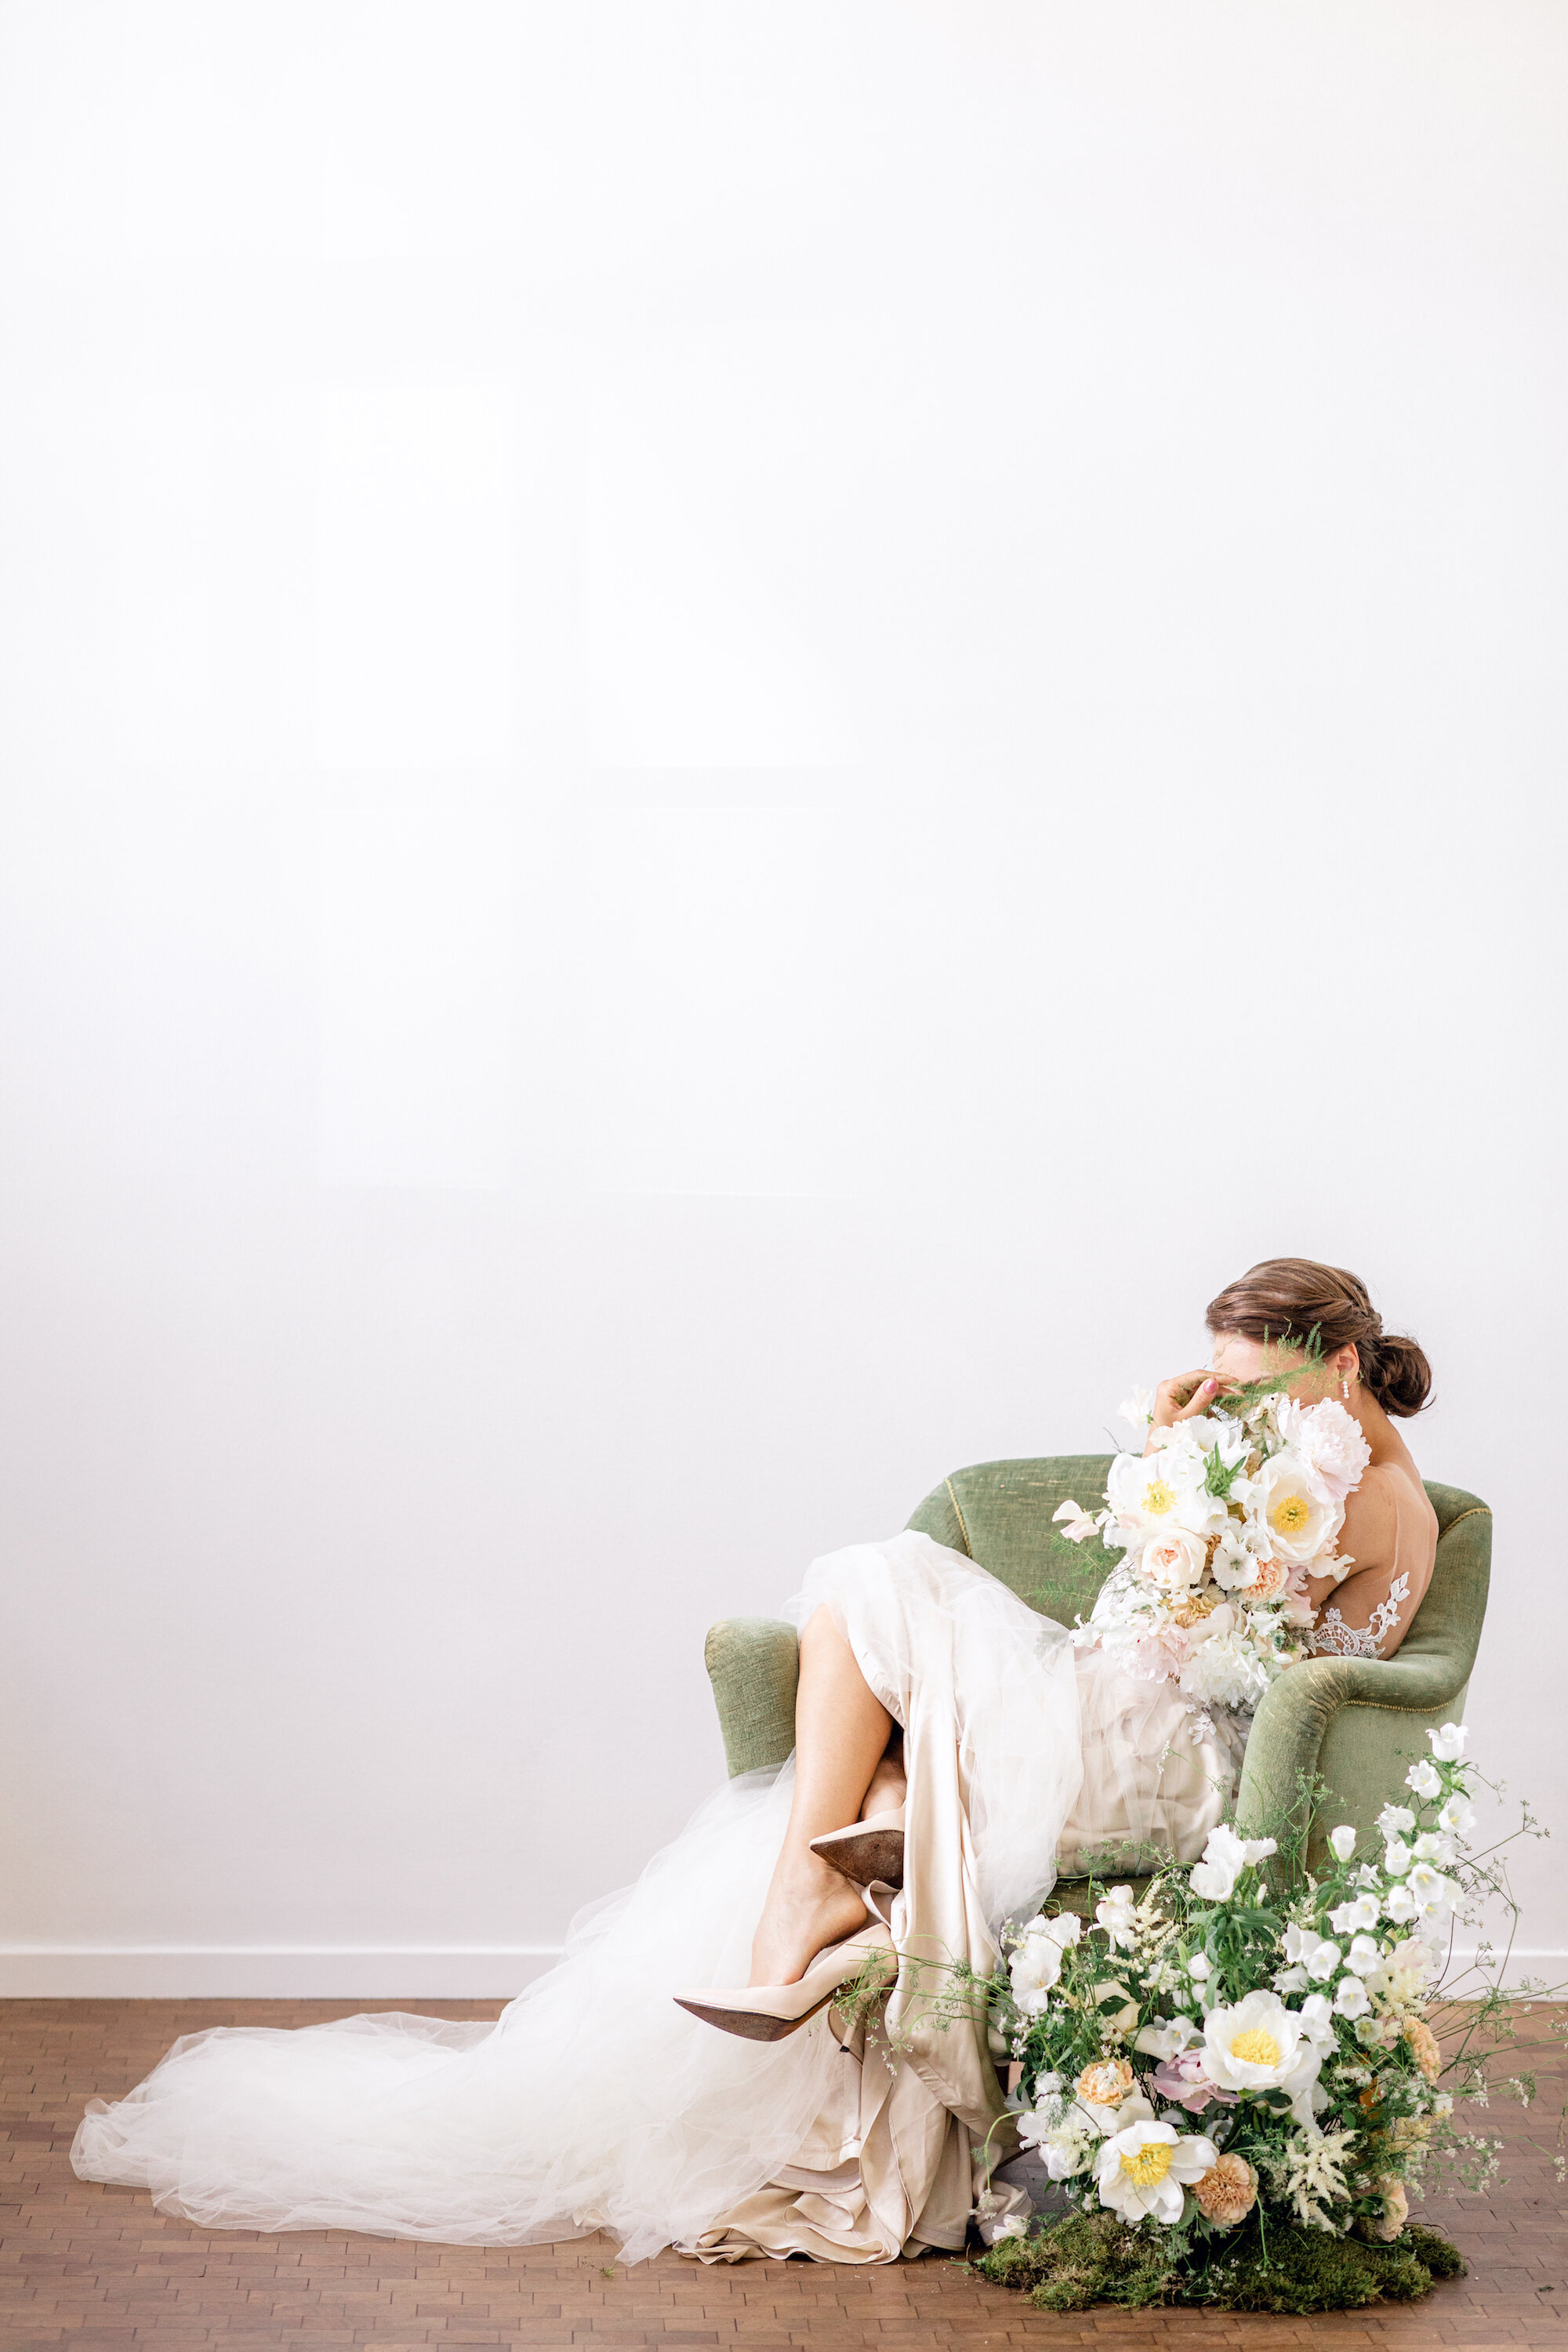 Aeiapthy-studio-sheryl-yip-bridal-wedding-dress-gown-bouquet-buket-brude-bryllup-København.jpg